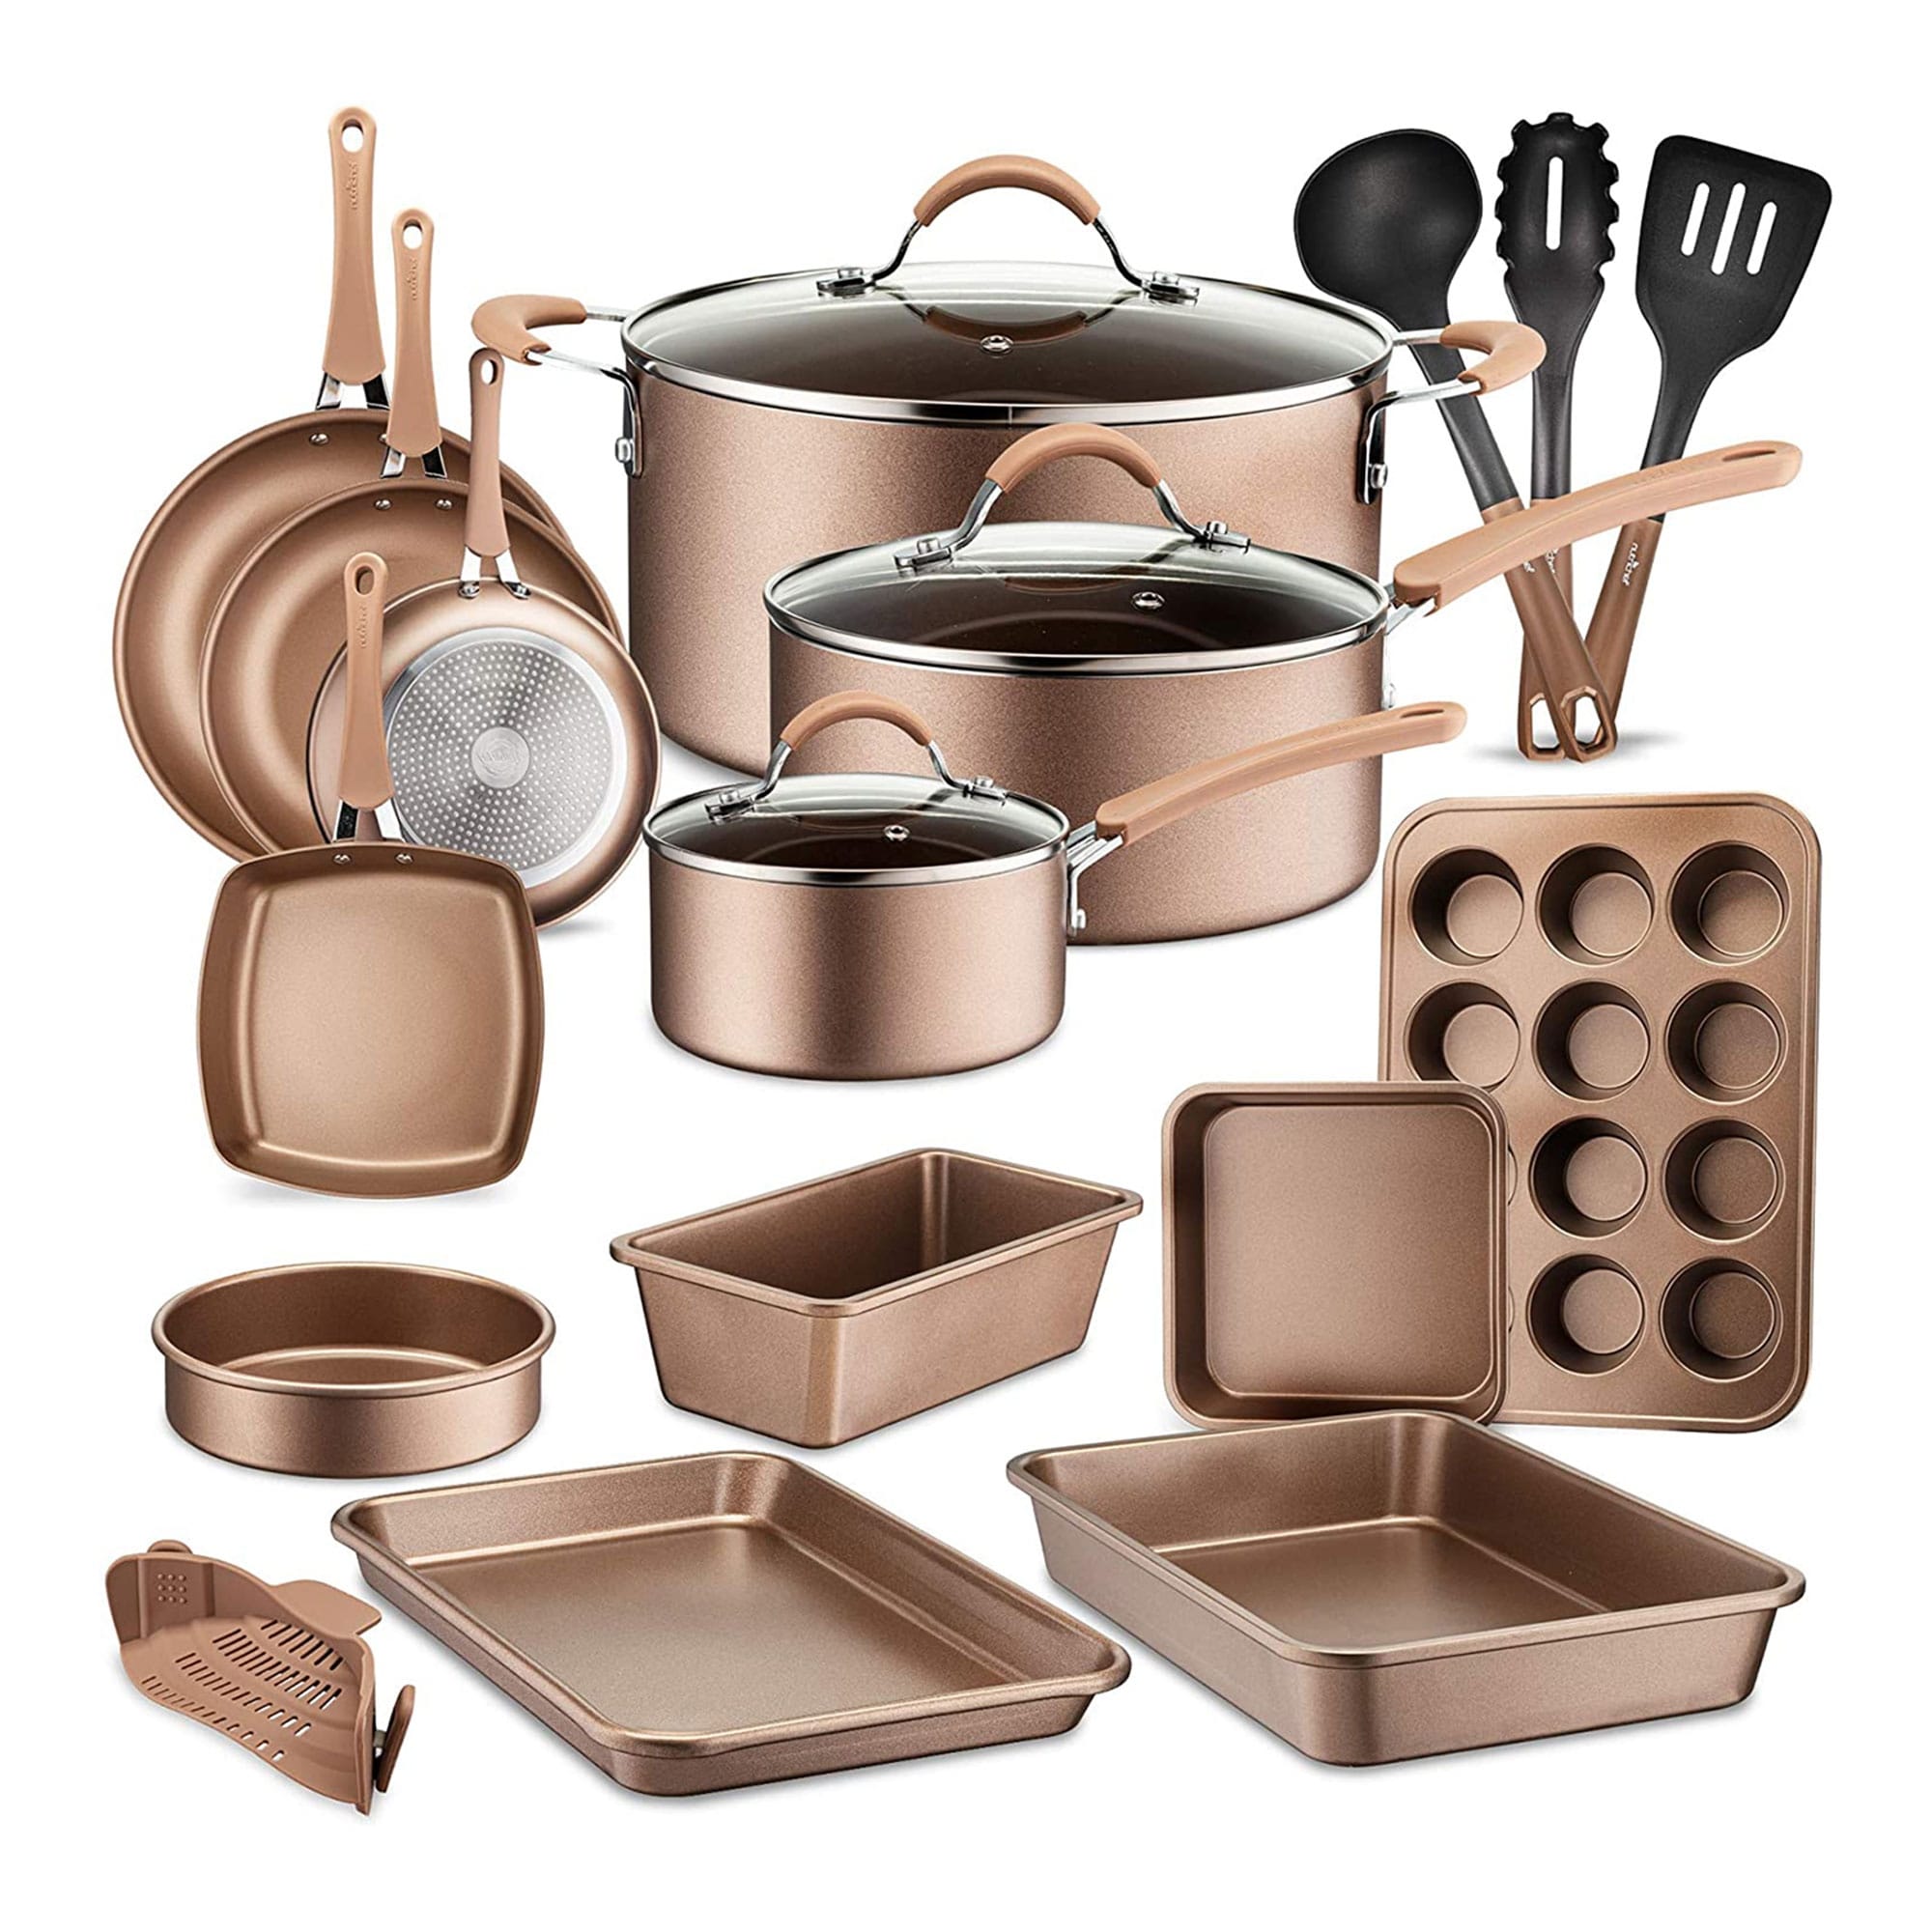 https://ak1.ostkcdn.com/images/products/is/images/direct/a4a175a2b0b1573aaadba3da02d82fab41da8e38/NutriChef-Nonstick-Cooking-Kitchen-Cookware-Pots-and-Pans%2C-20-Piece-Set%2C-Bronze.jpg